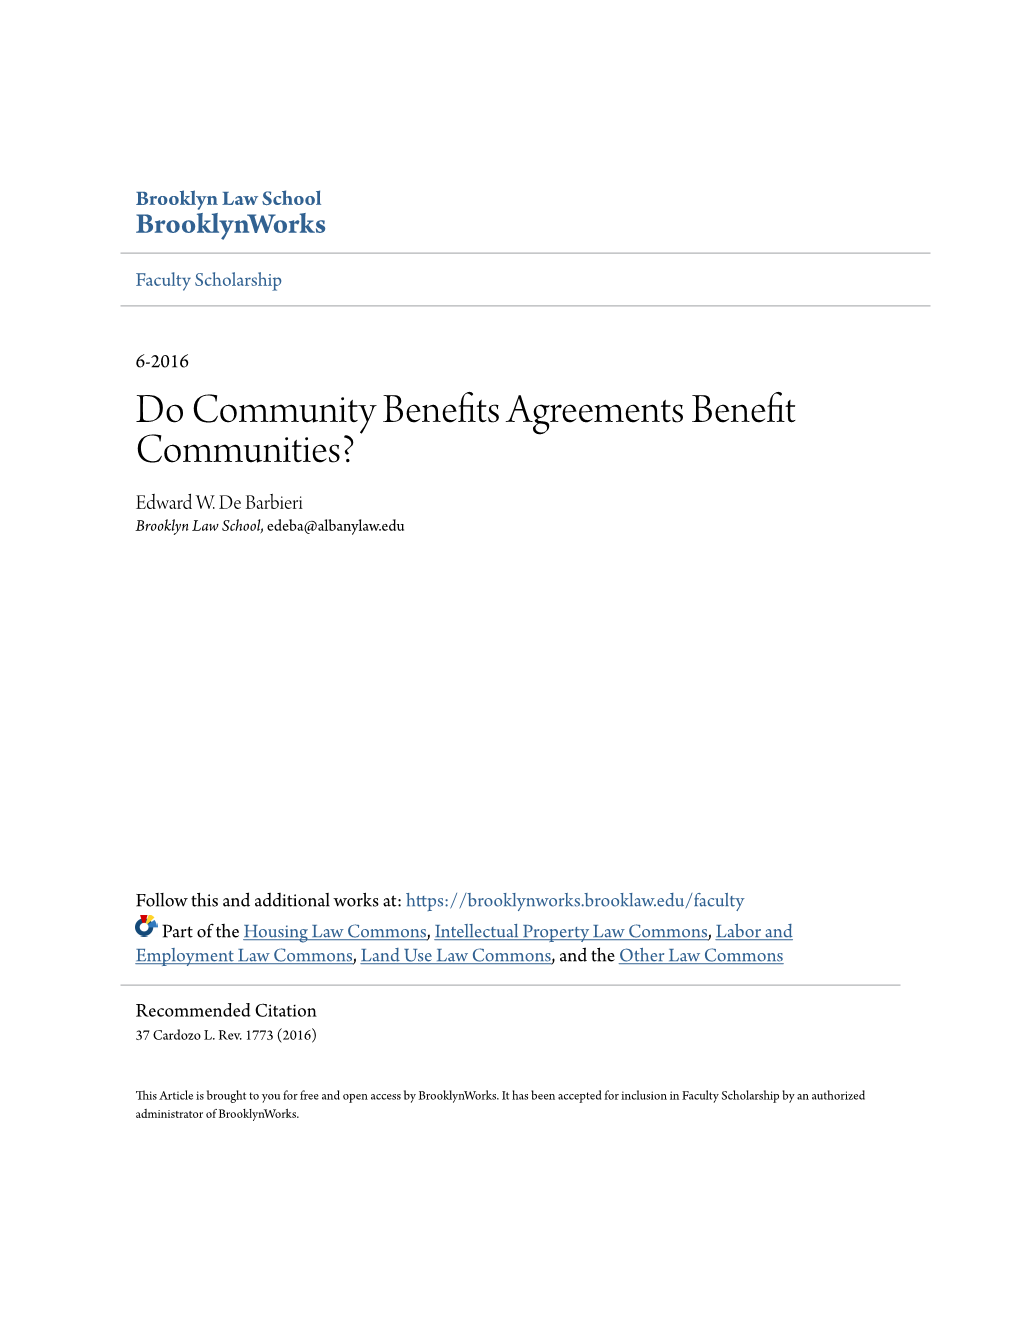 Do Community Benefits Agreements Benefit Communities? Edward W